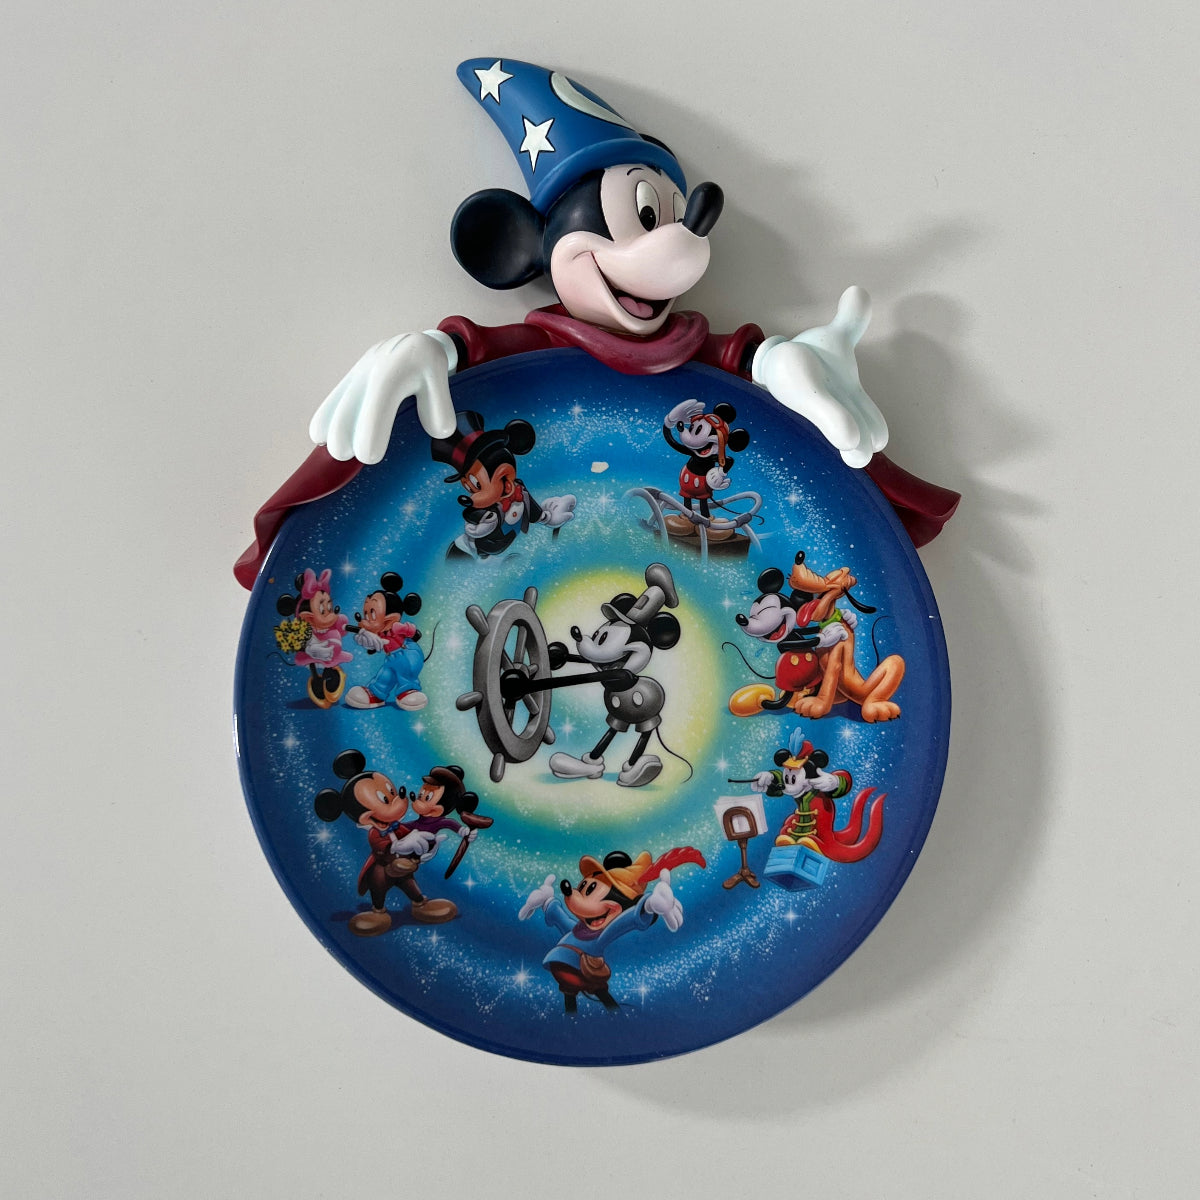 Vintage Disney 75th Anniversary The Bradford Exchange Decorative Plates set